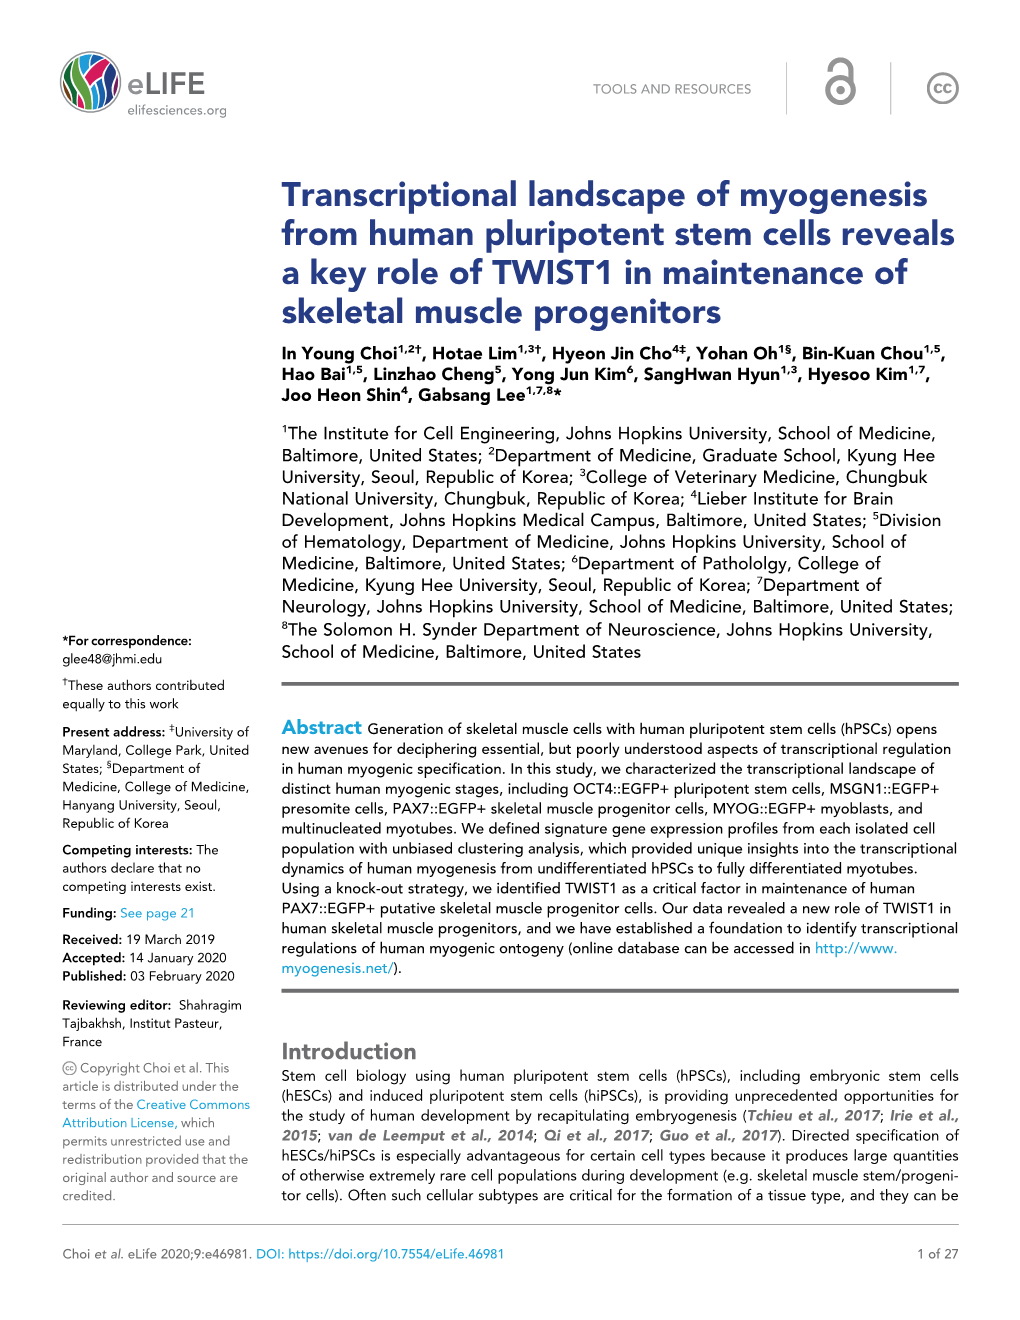 Transcriptional Landscape of Myogenesis from Human Pluripotent